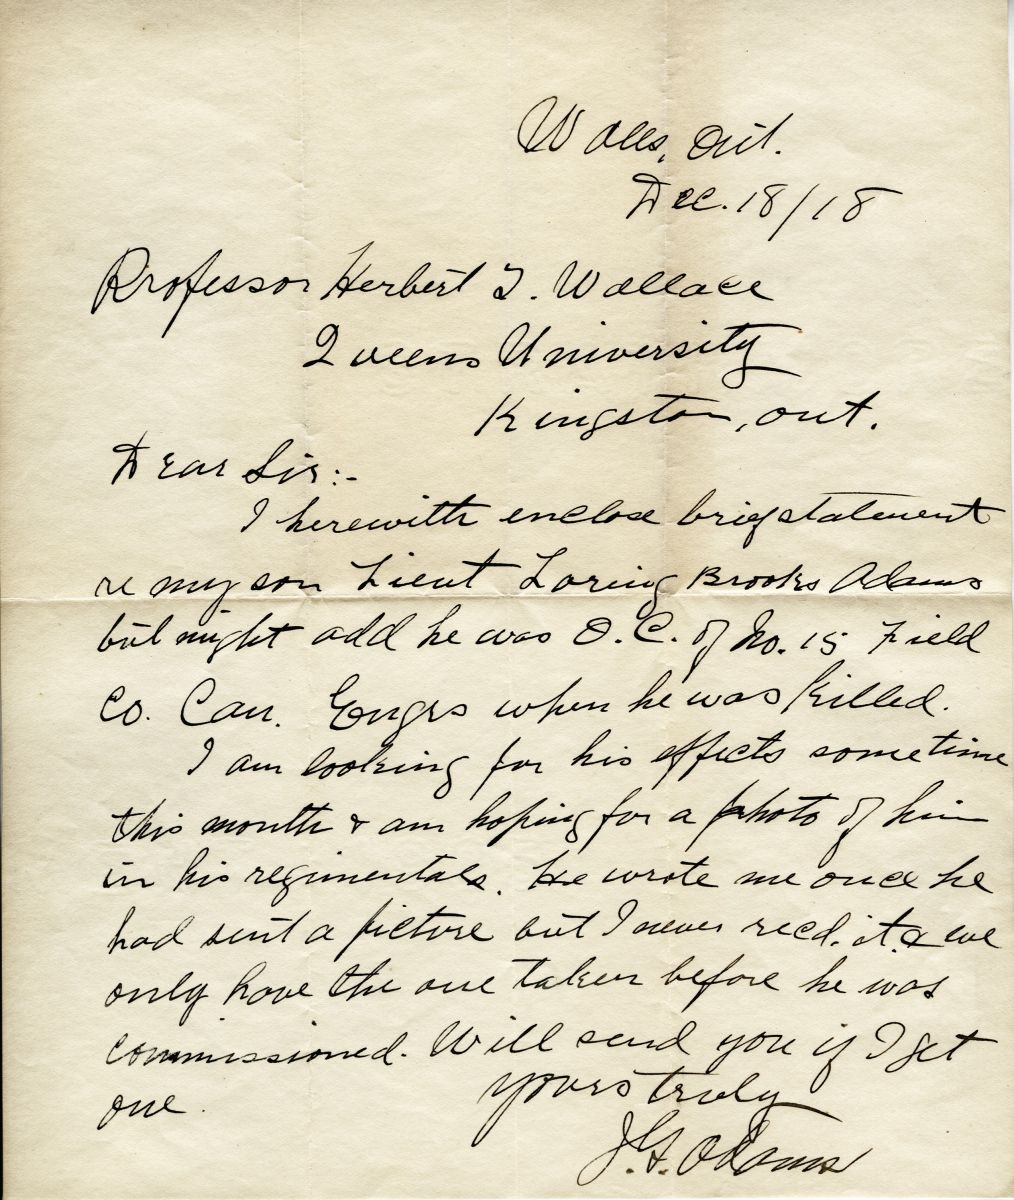 "Letter from J.G. Adams to Professor Herbert Wallace, 18th December 1918"